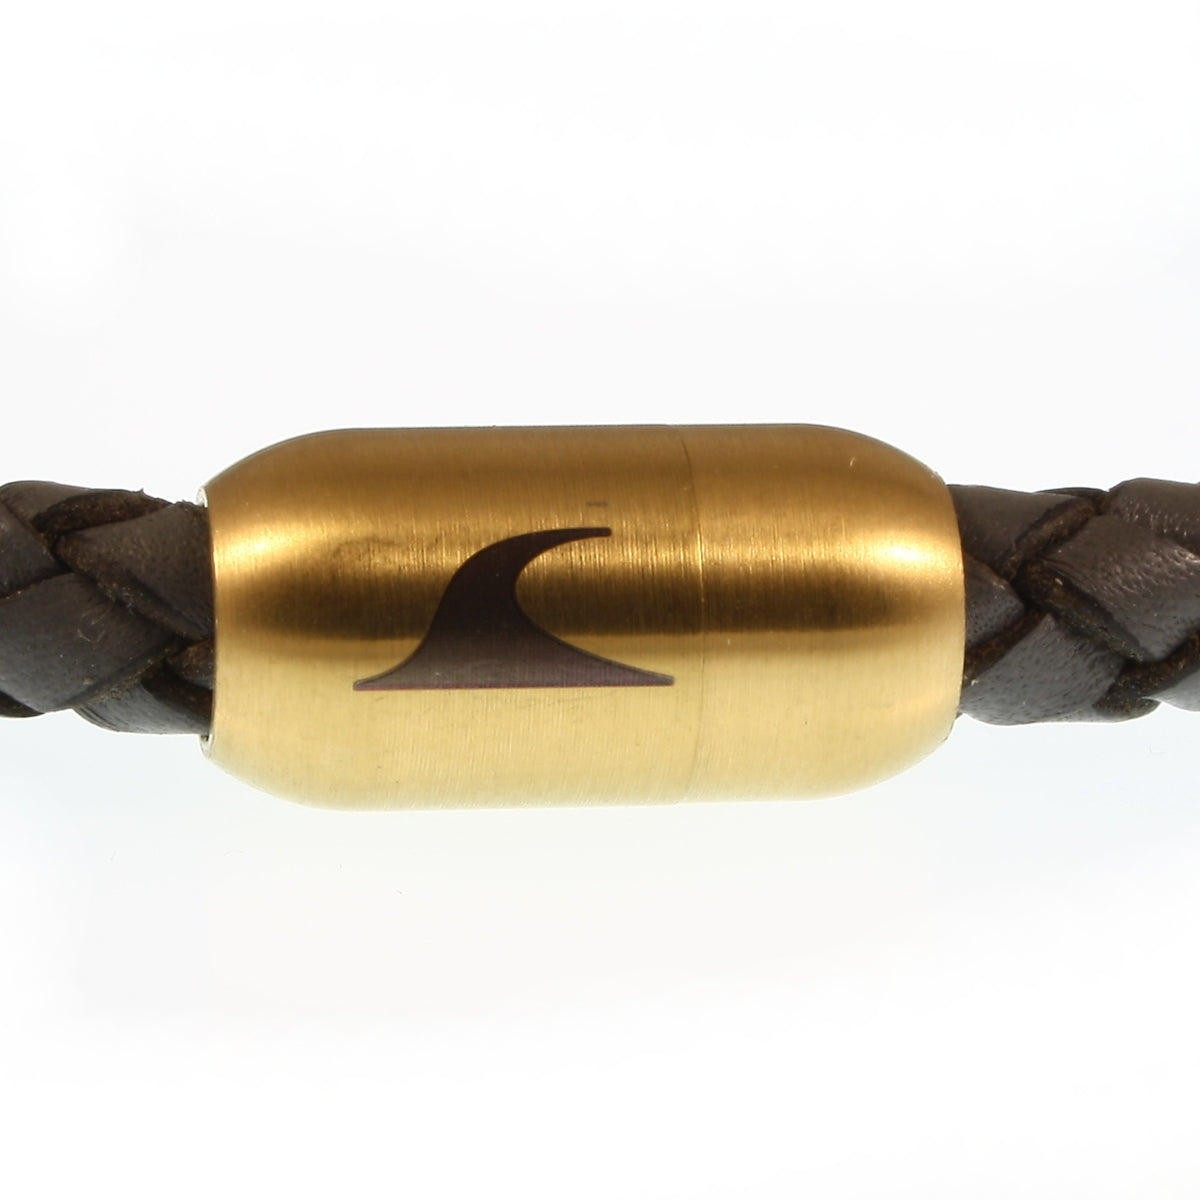 Herren-leder-armband-damen-sylt-dunkelgrau-anthrazit-gold-geflochten-Edelstahlverschluss-detail-wavepirate-shop-f